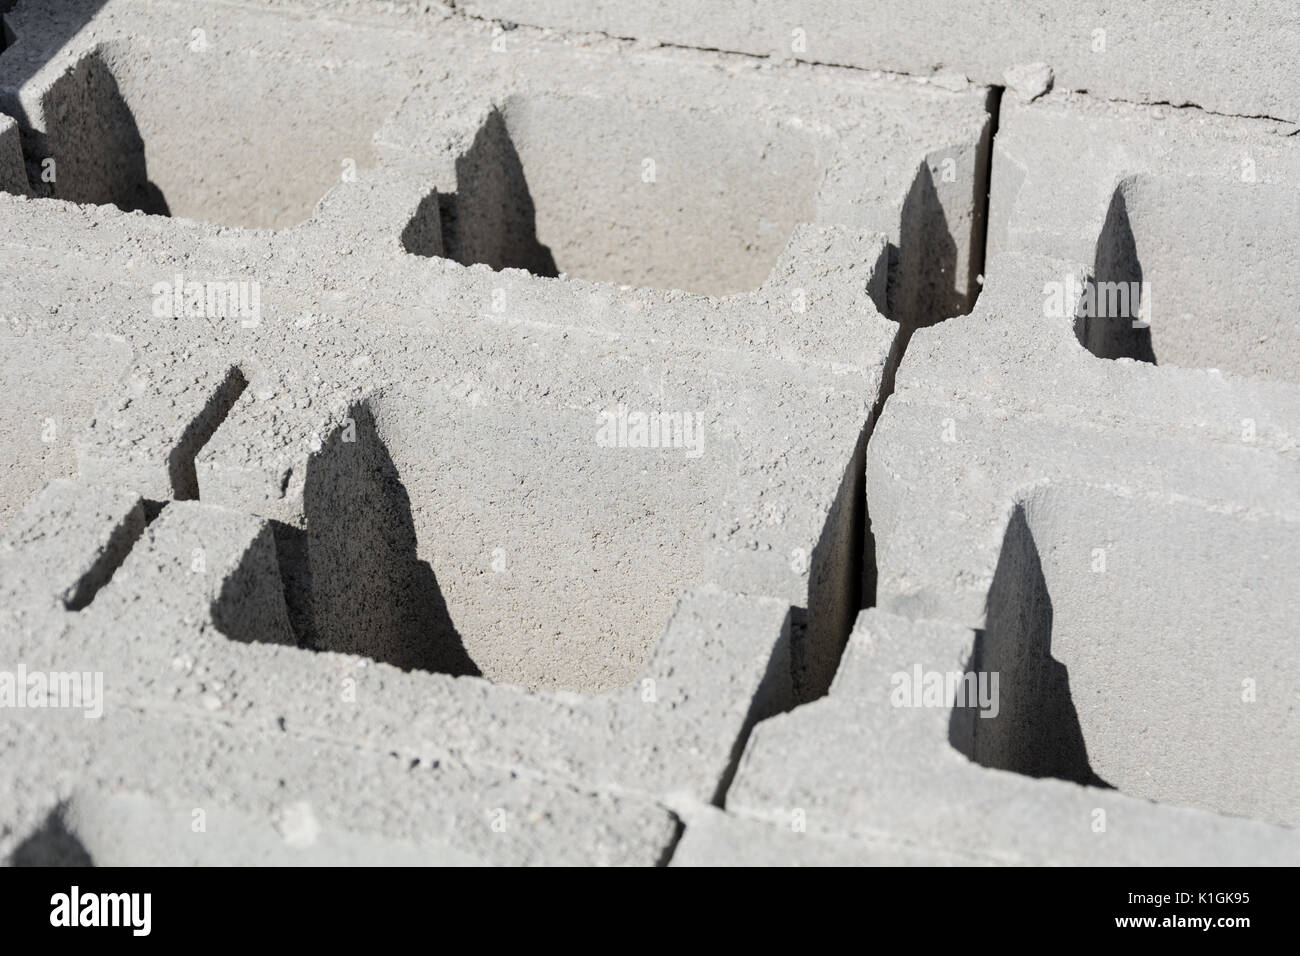 Concrete blocks top view close-up Stock Photo